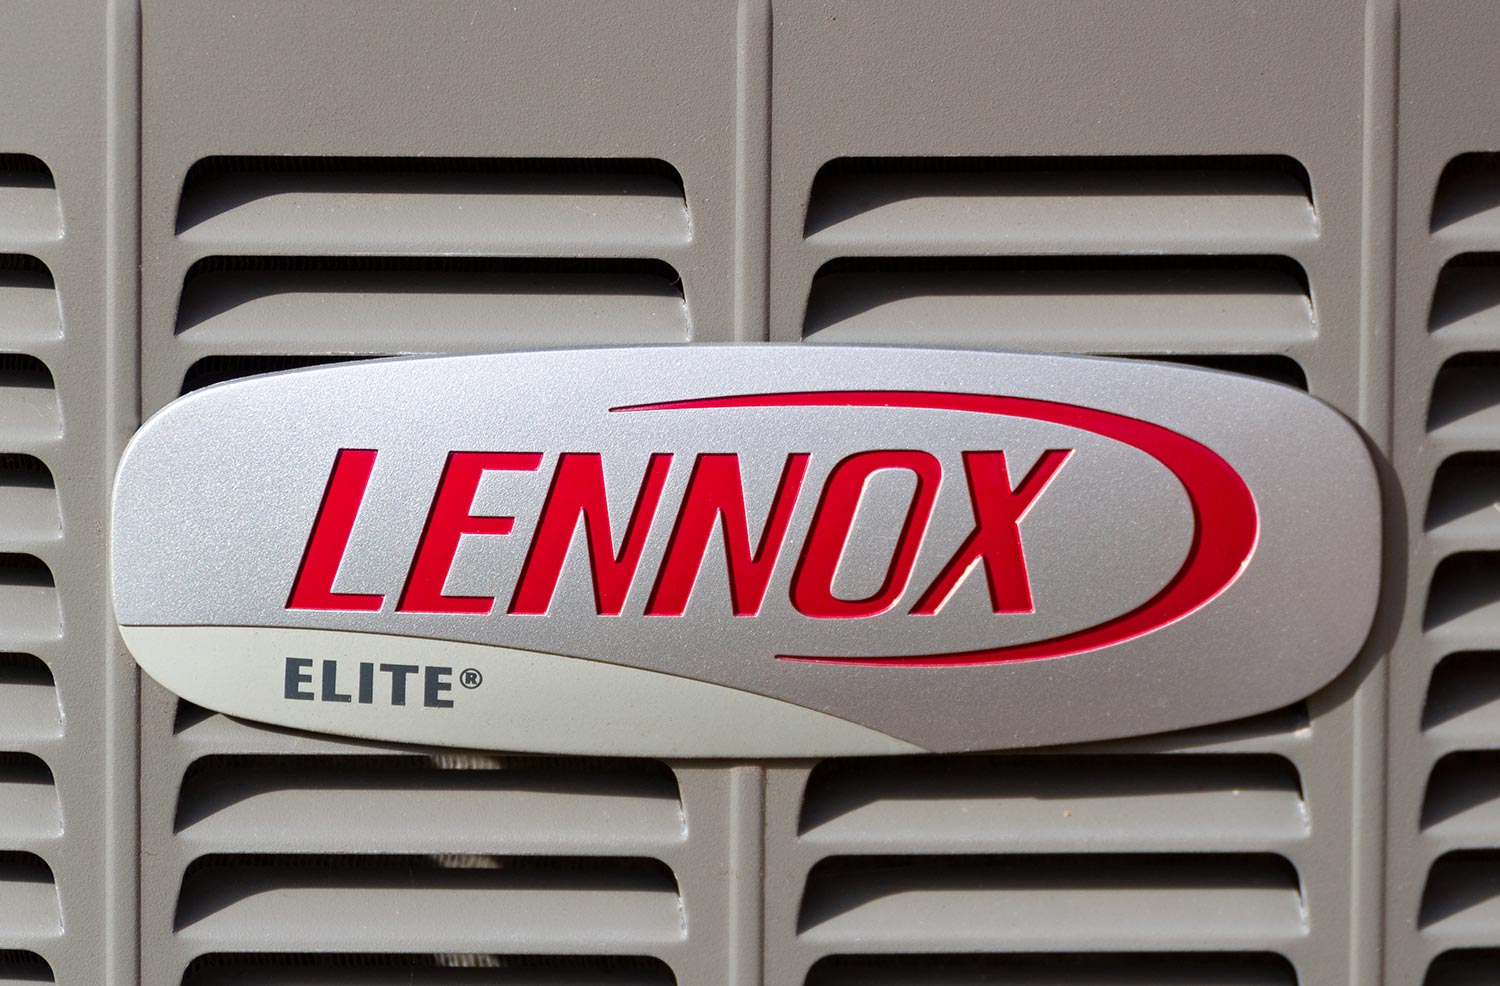 Lennox corporation trademark logo and trademark